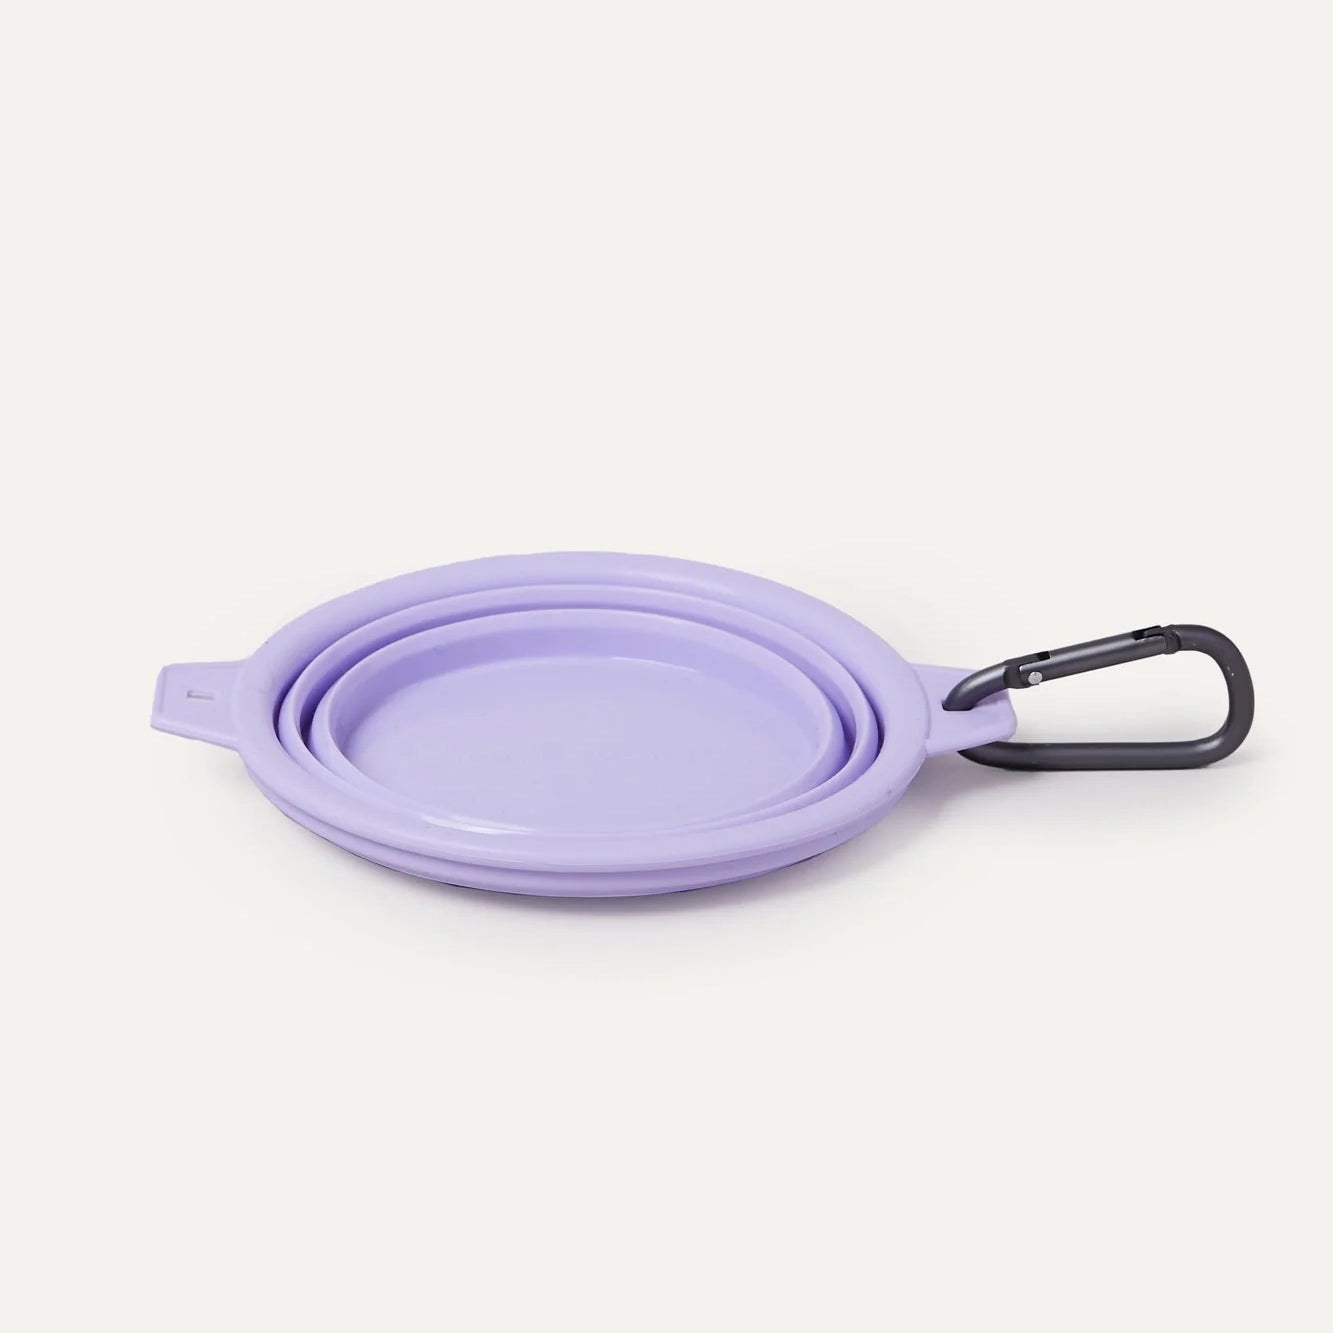 Rubber Travel Bowl - Lavender